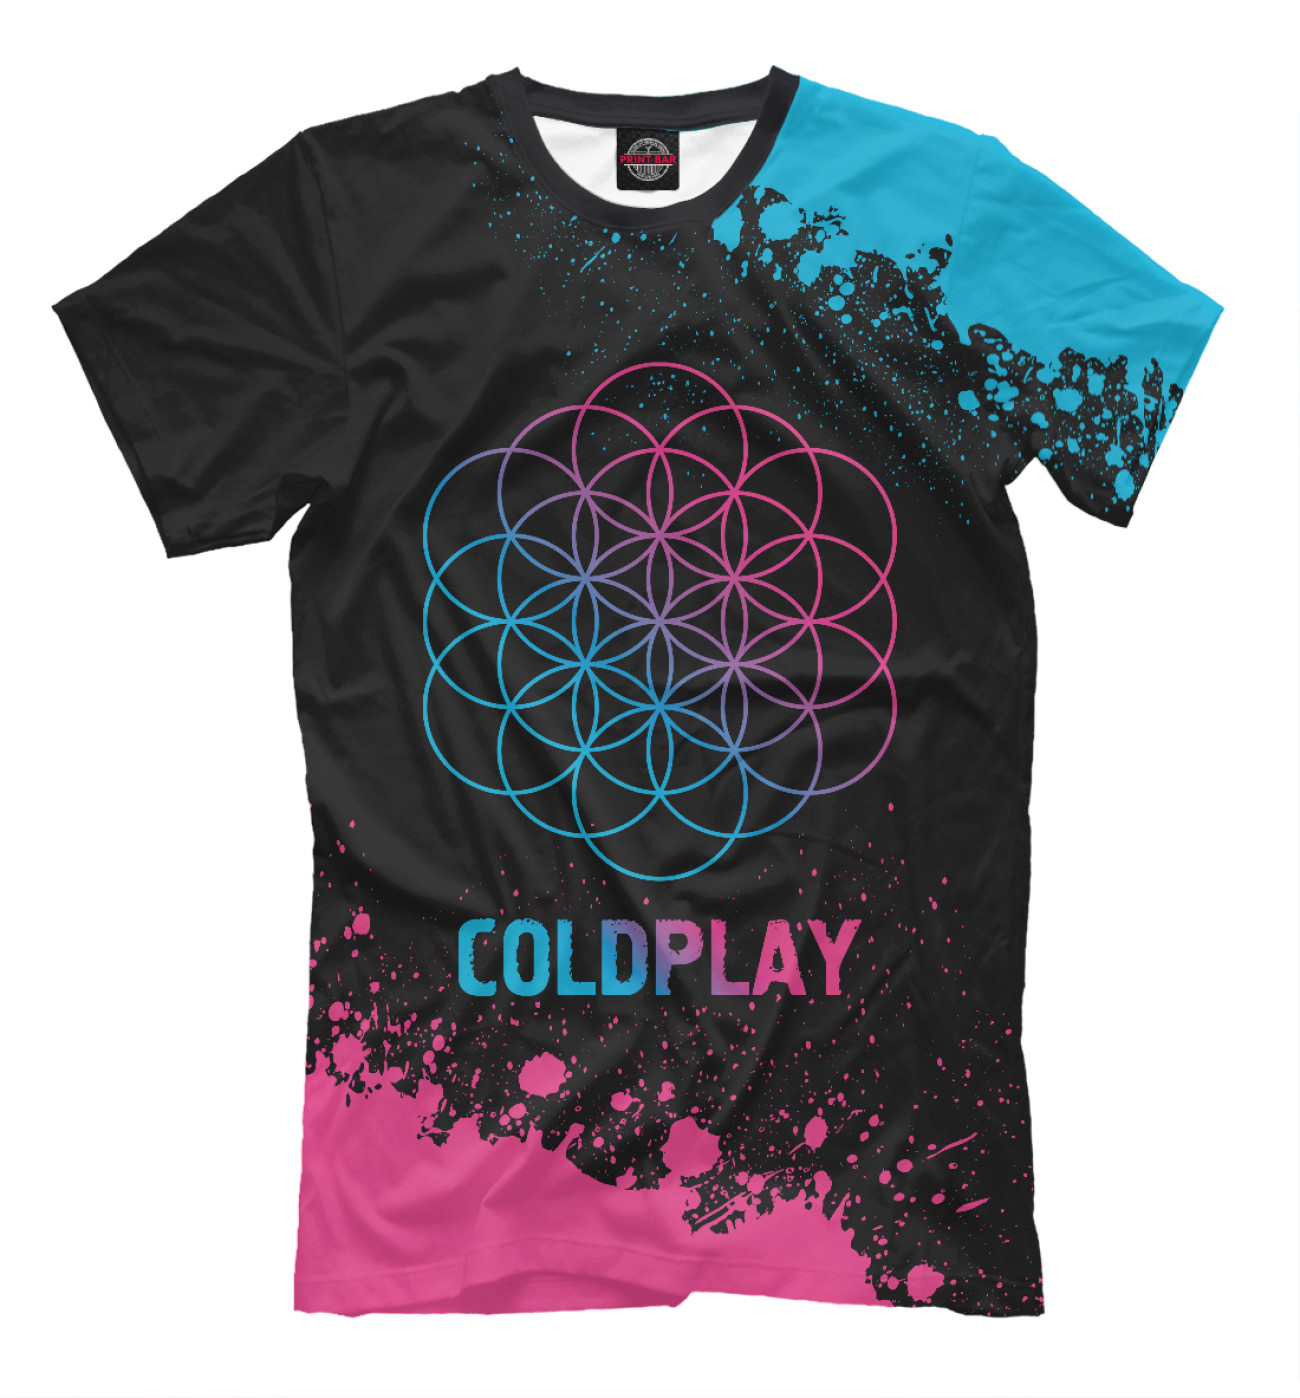 Мужская Футболка Coldplay Neon Gradient (colors), артикул: COL-624017-fut-2